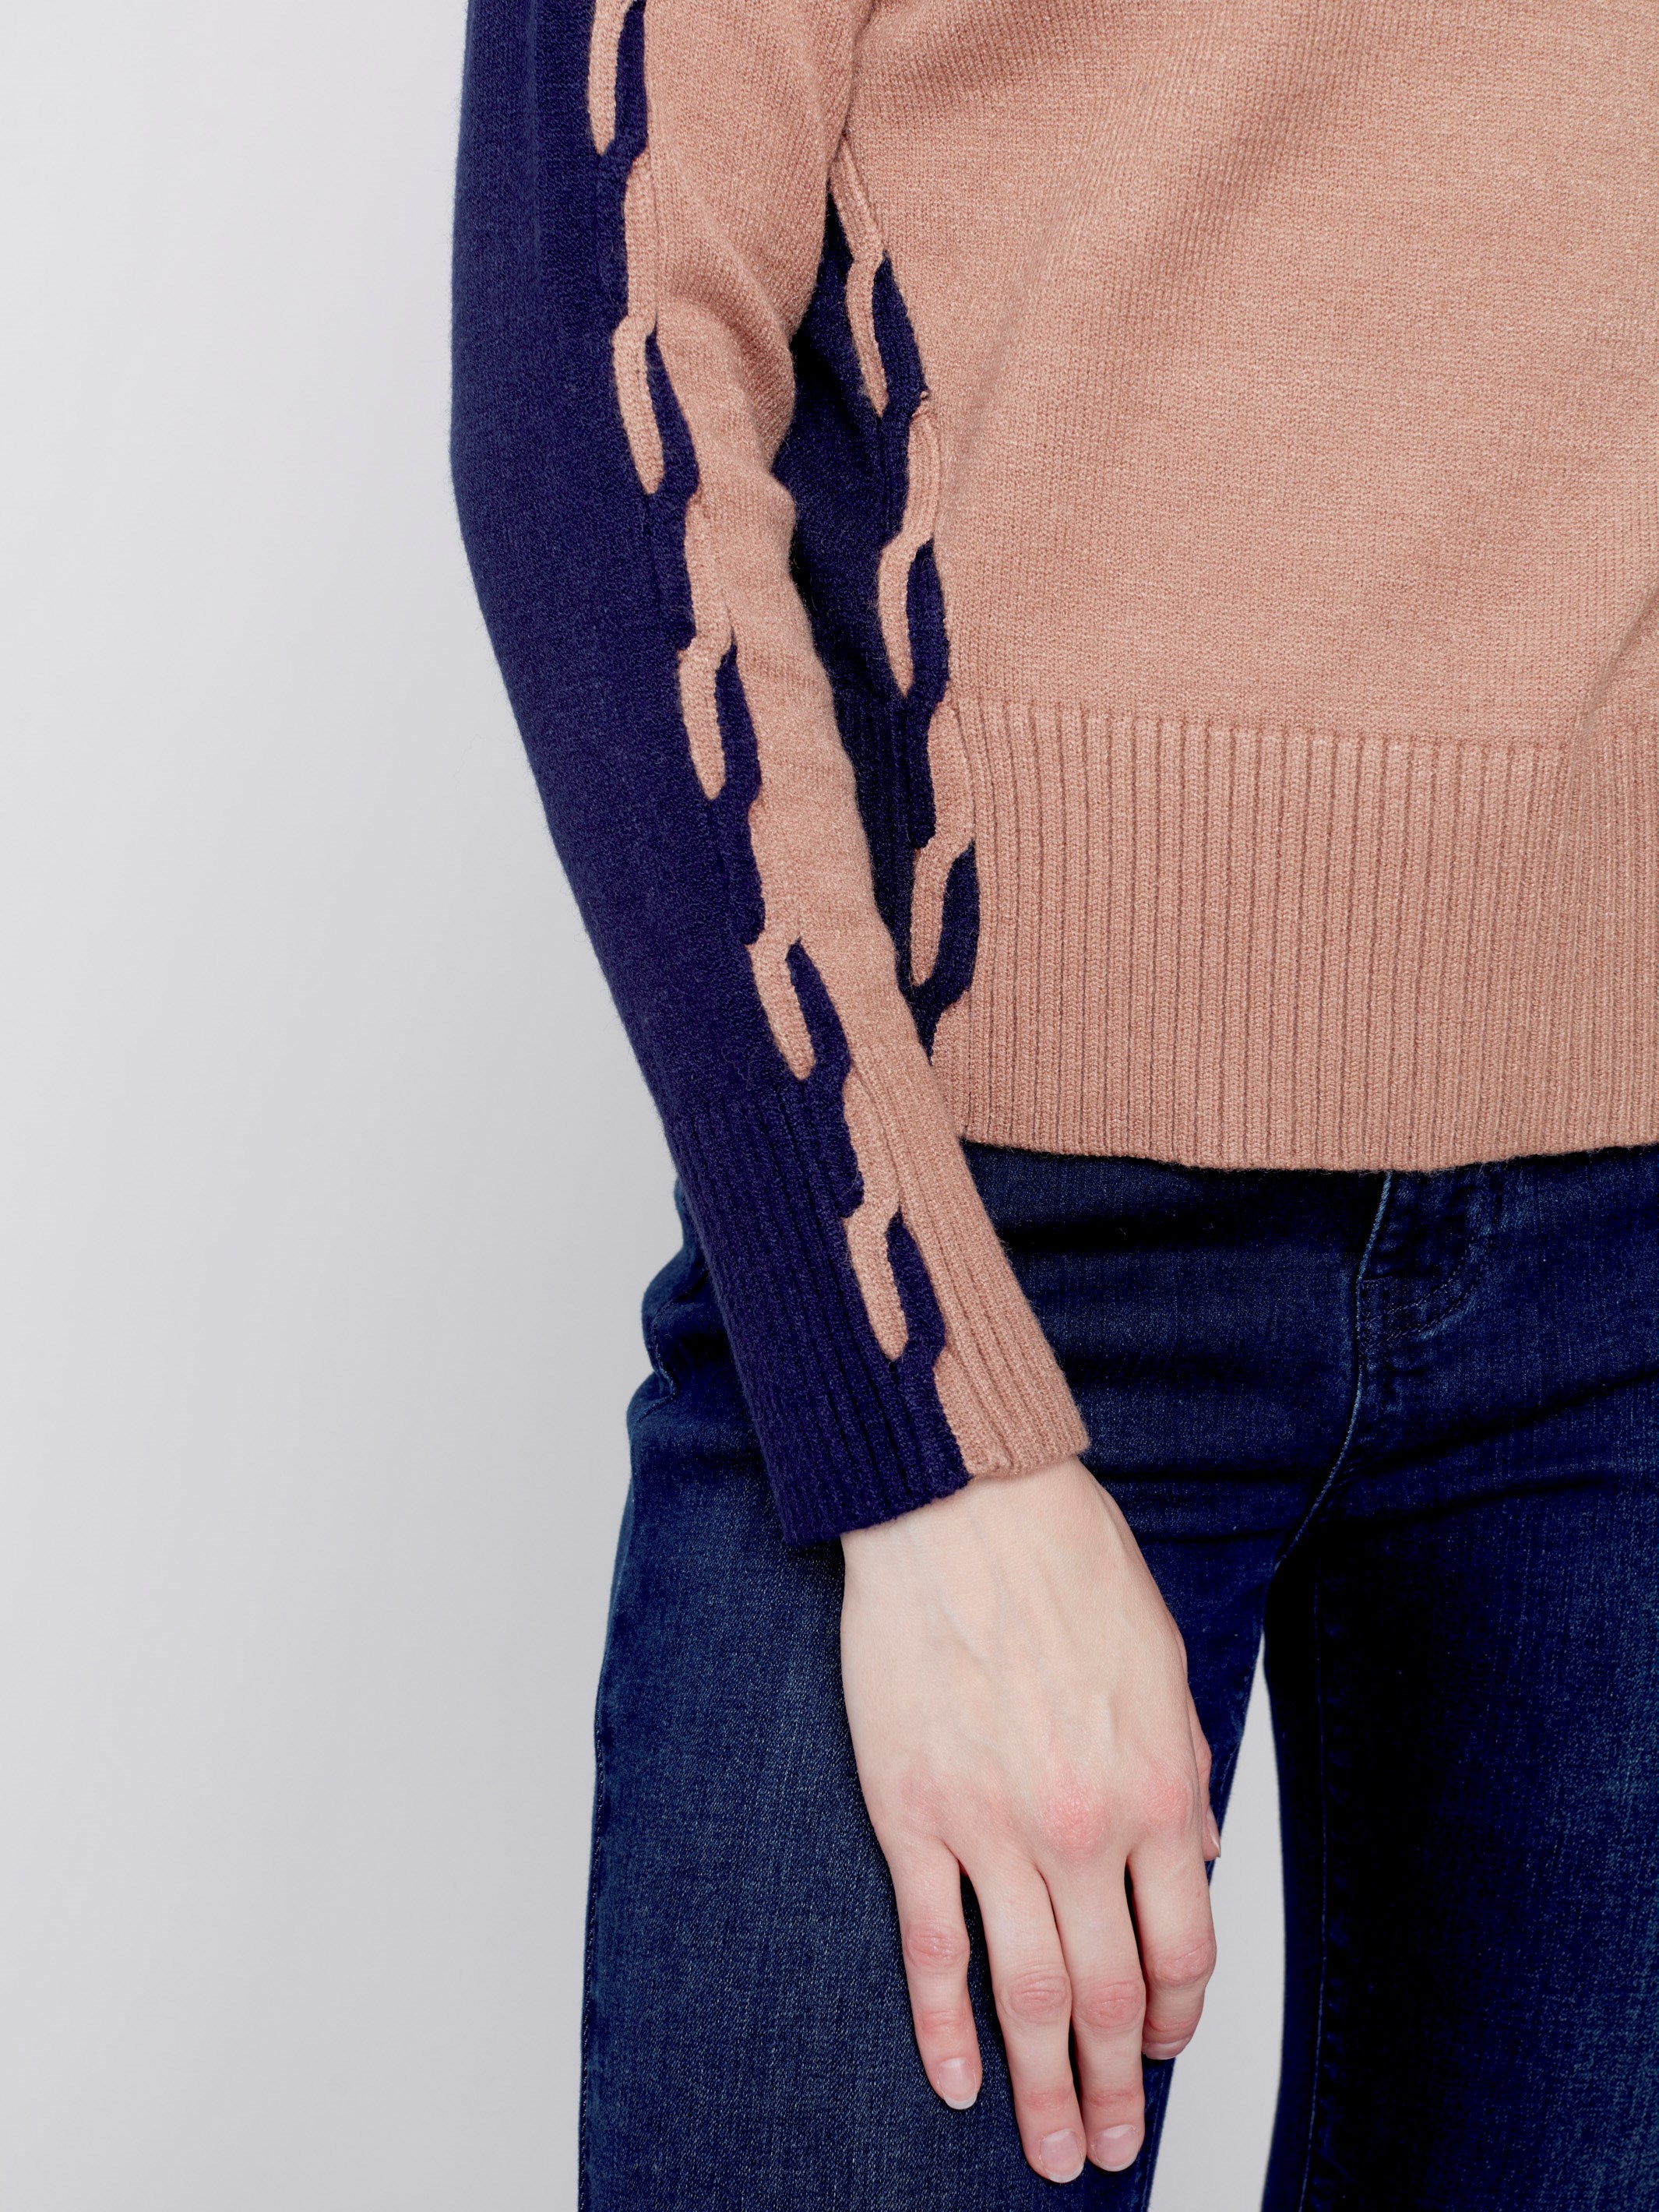 Color Block Knit Sweater - Truffle